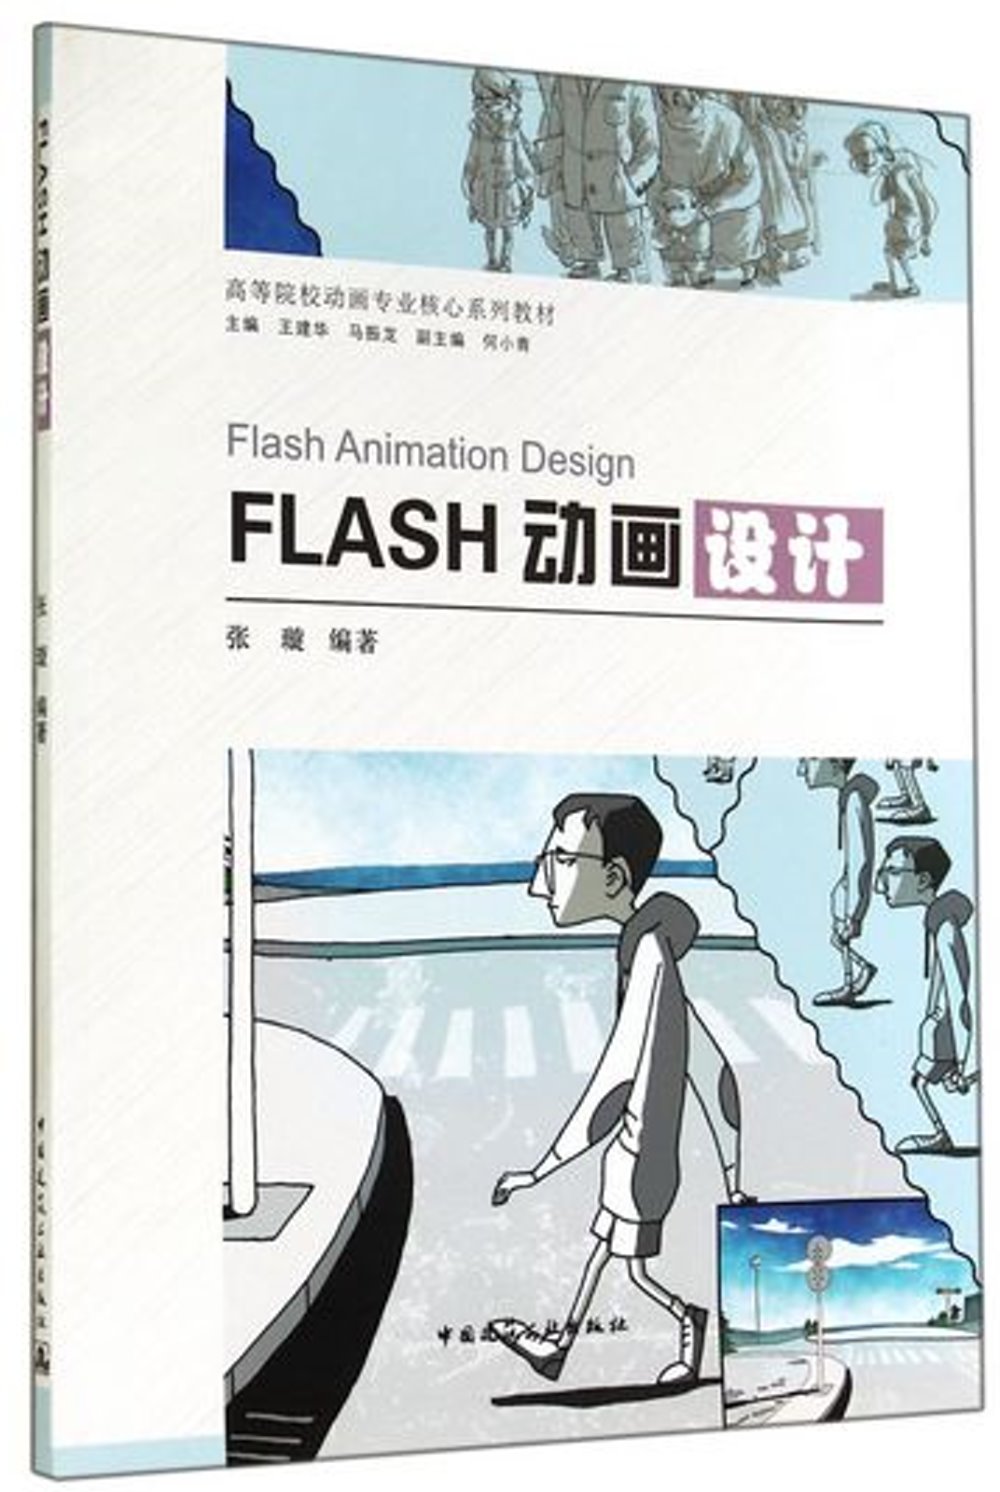 FLASH動畫設計